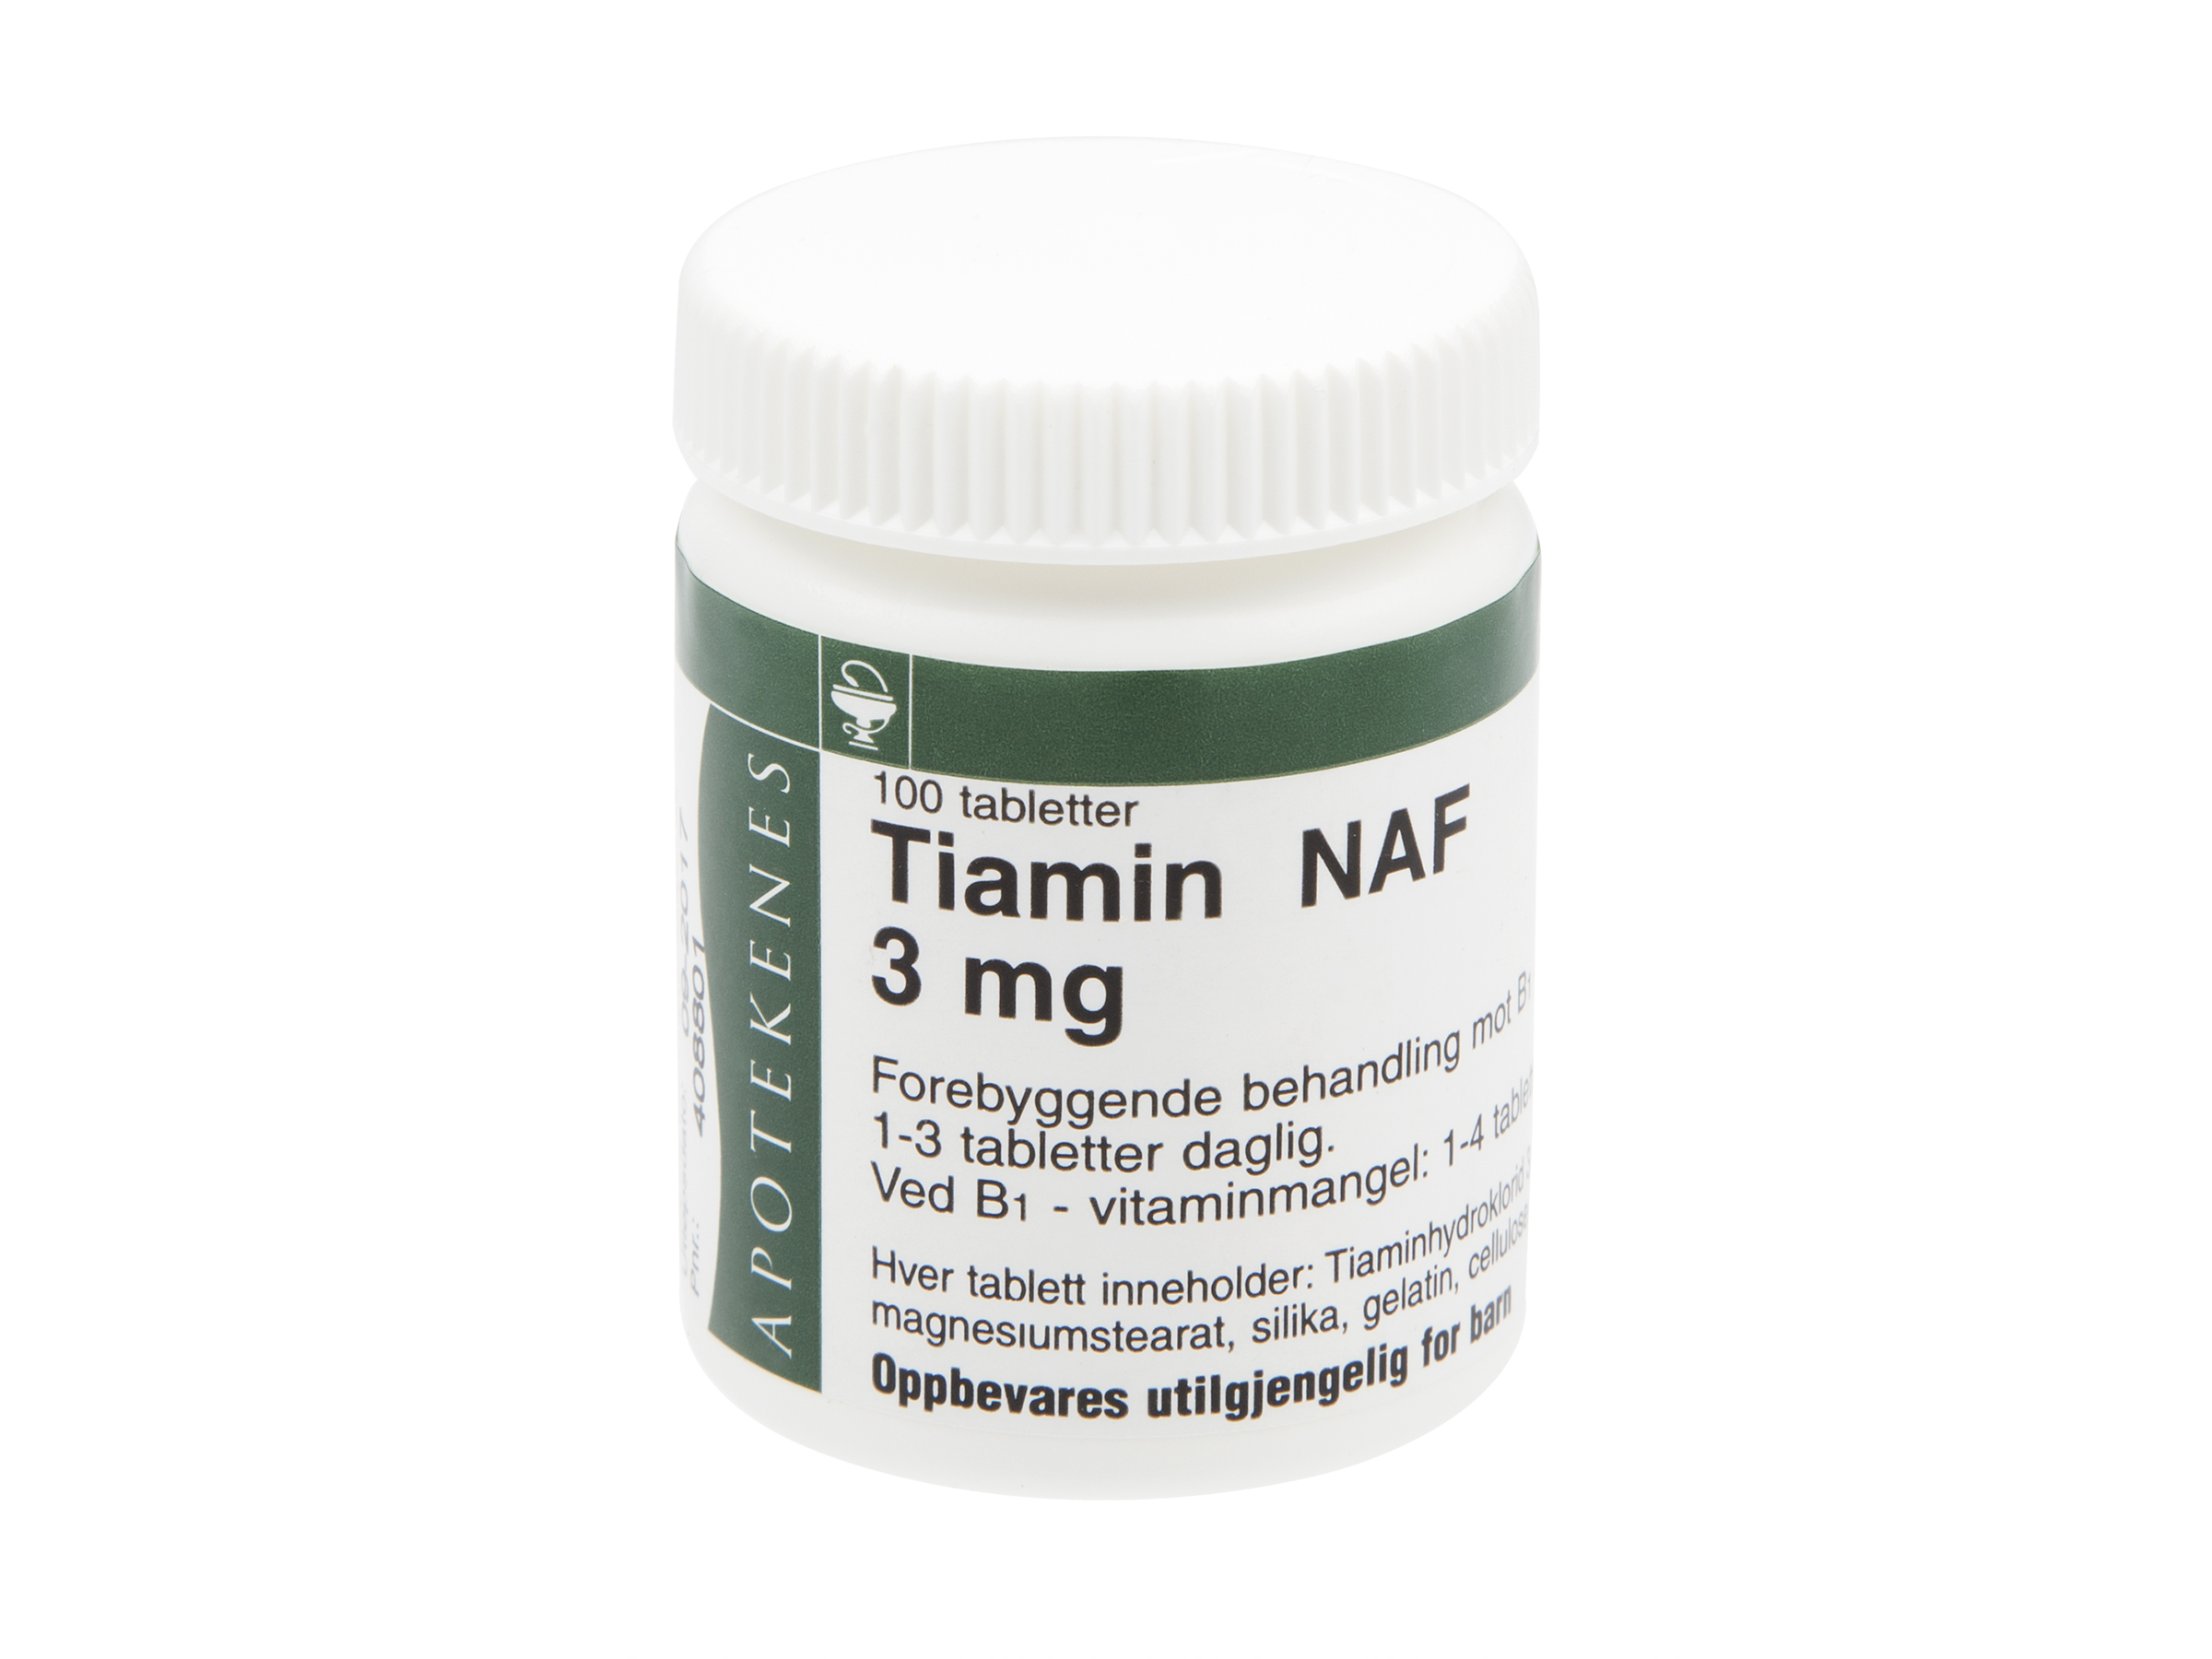 NAF Tiamin NAF 3mg, 100 tabletter